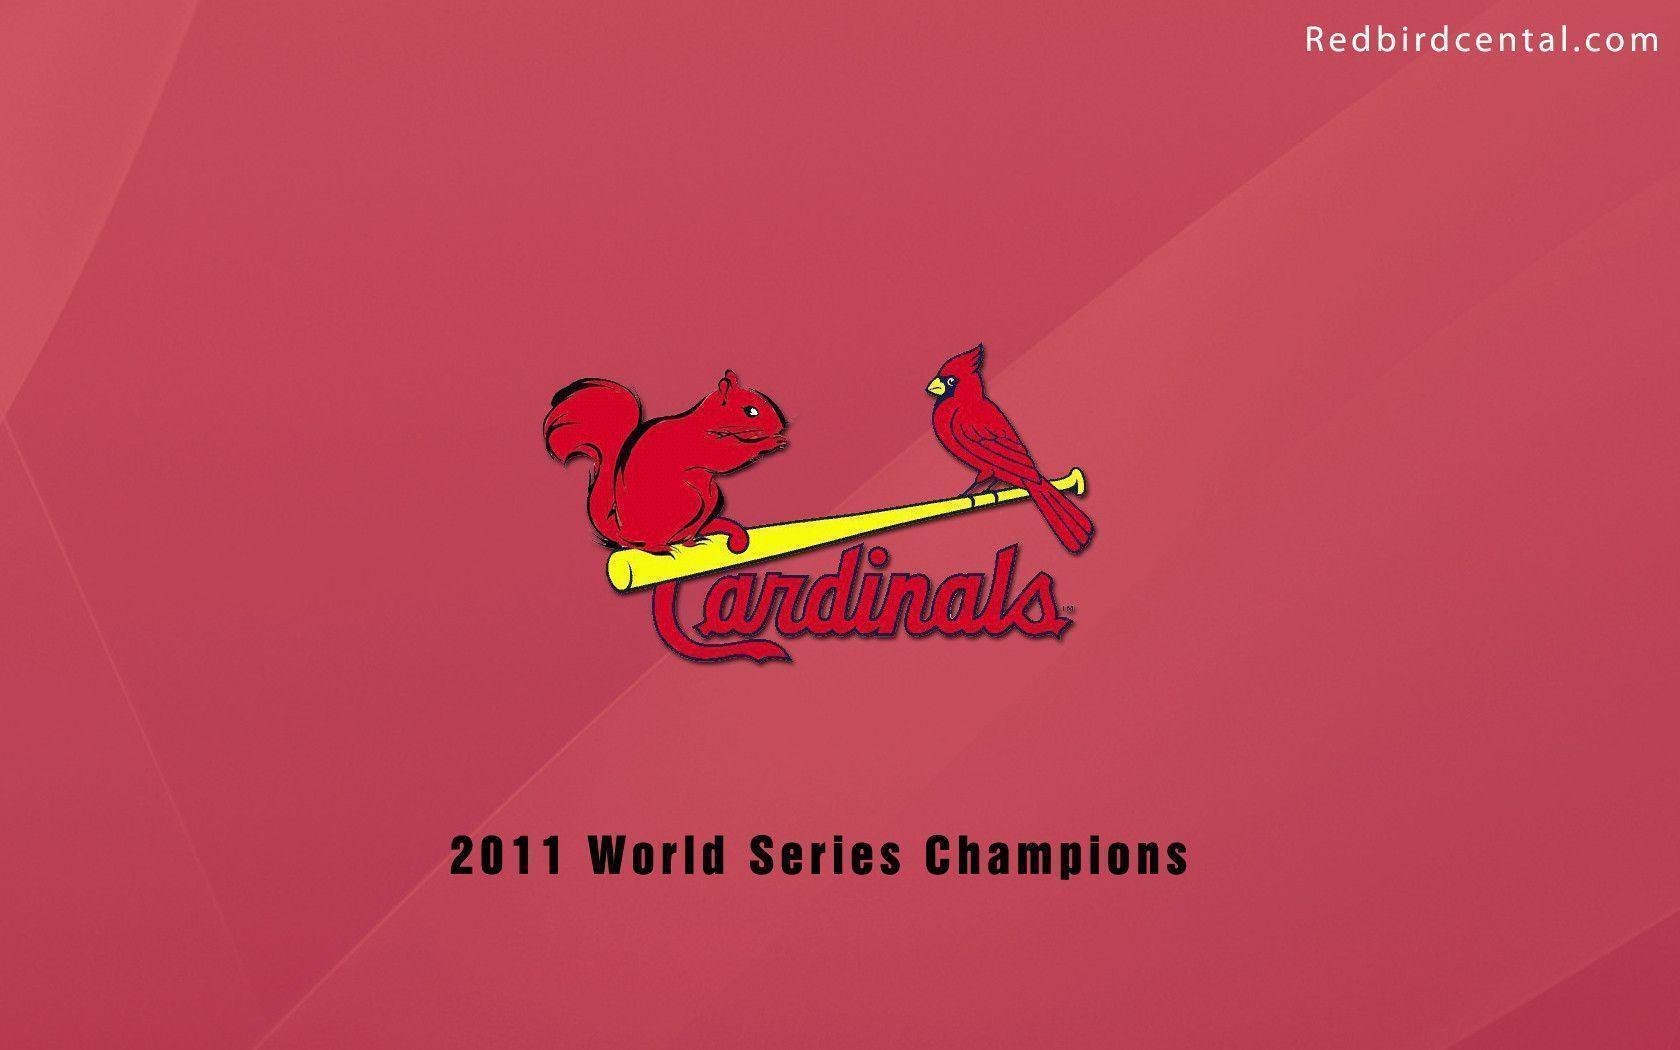 RedbirdCentral.com. Louis Cardinals Desktop Wallpaper